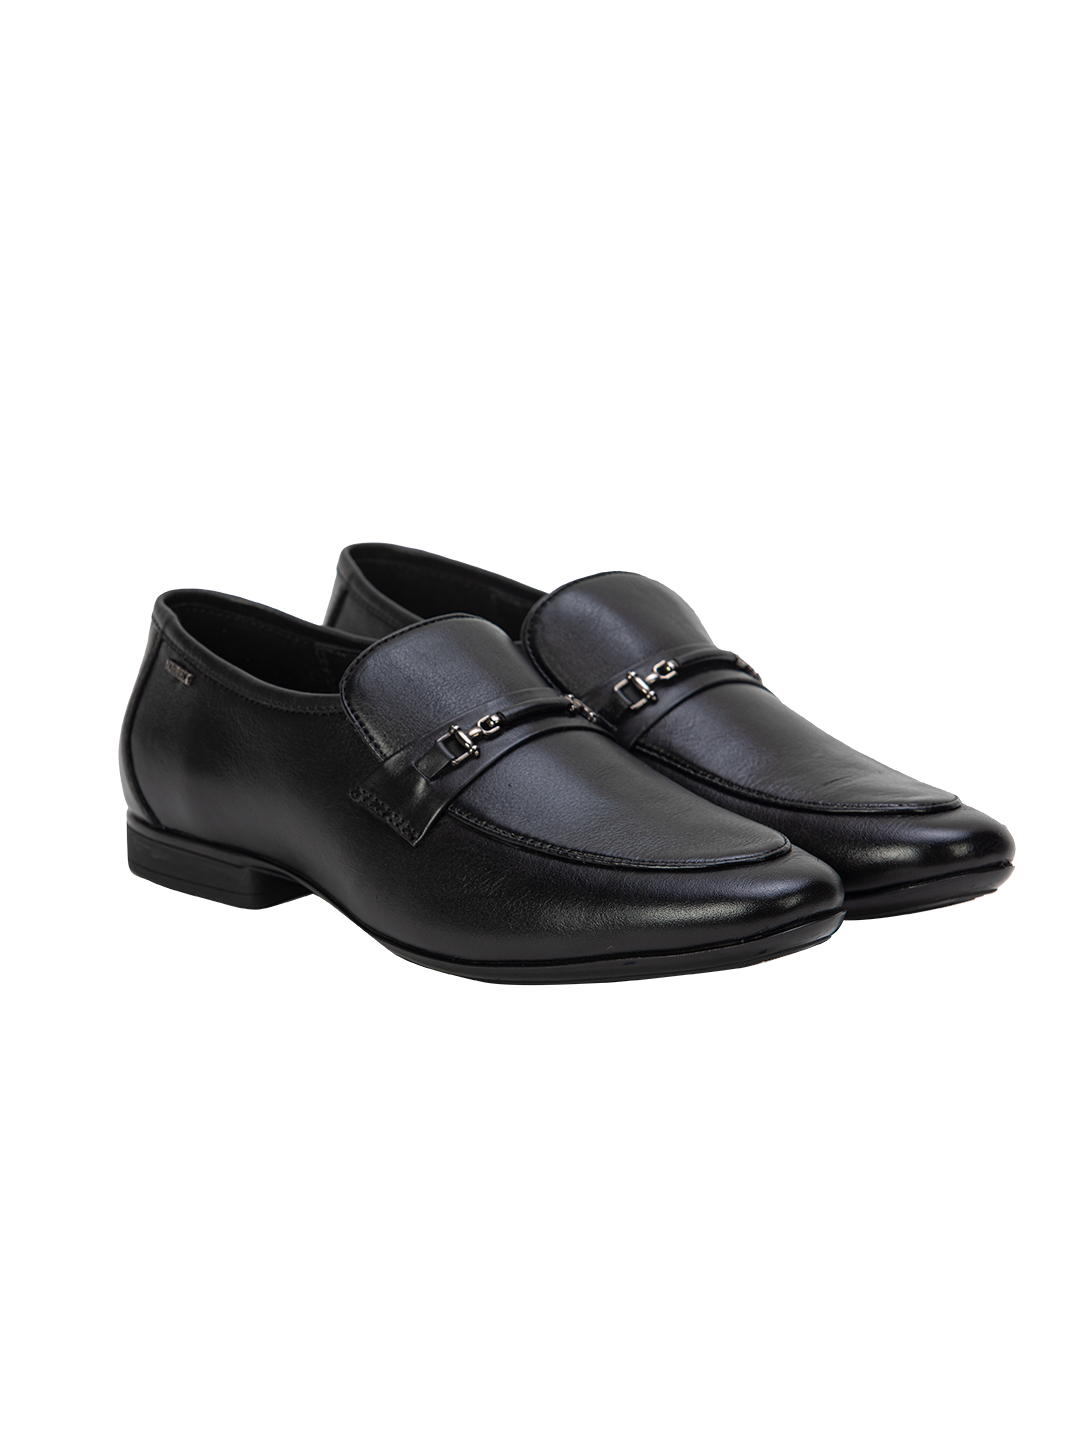 Buy Von Wellx Germany Comfort Black Glib Shoes Online in Pune